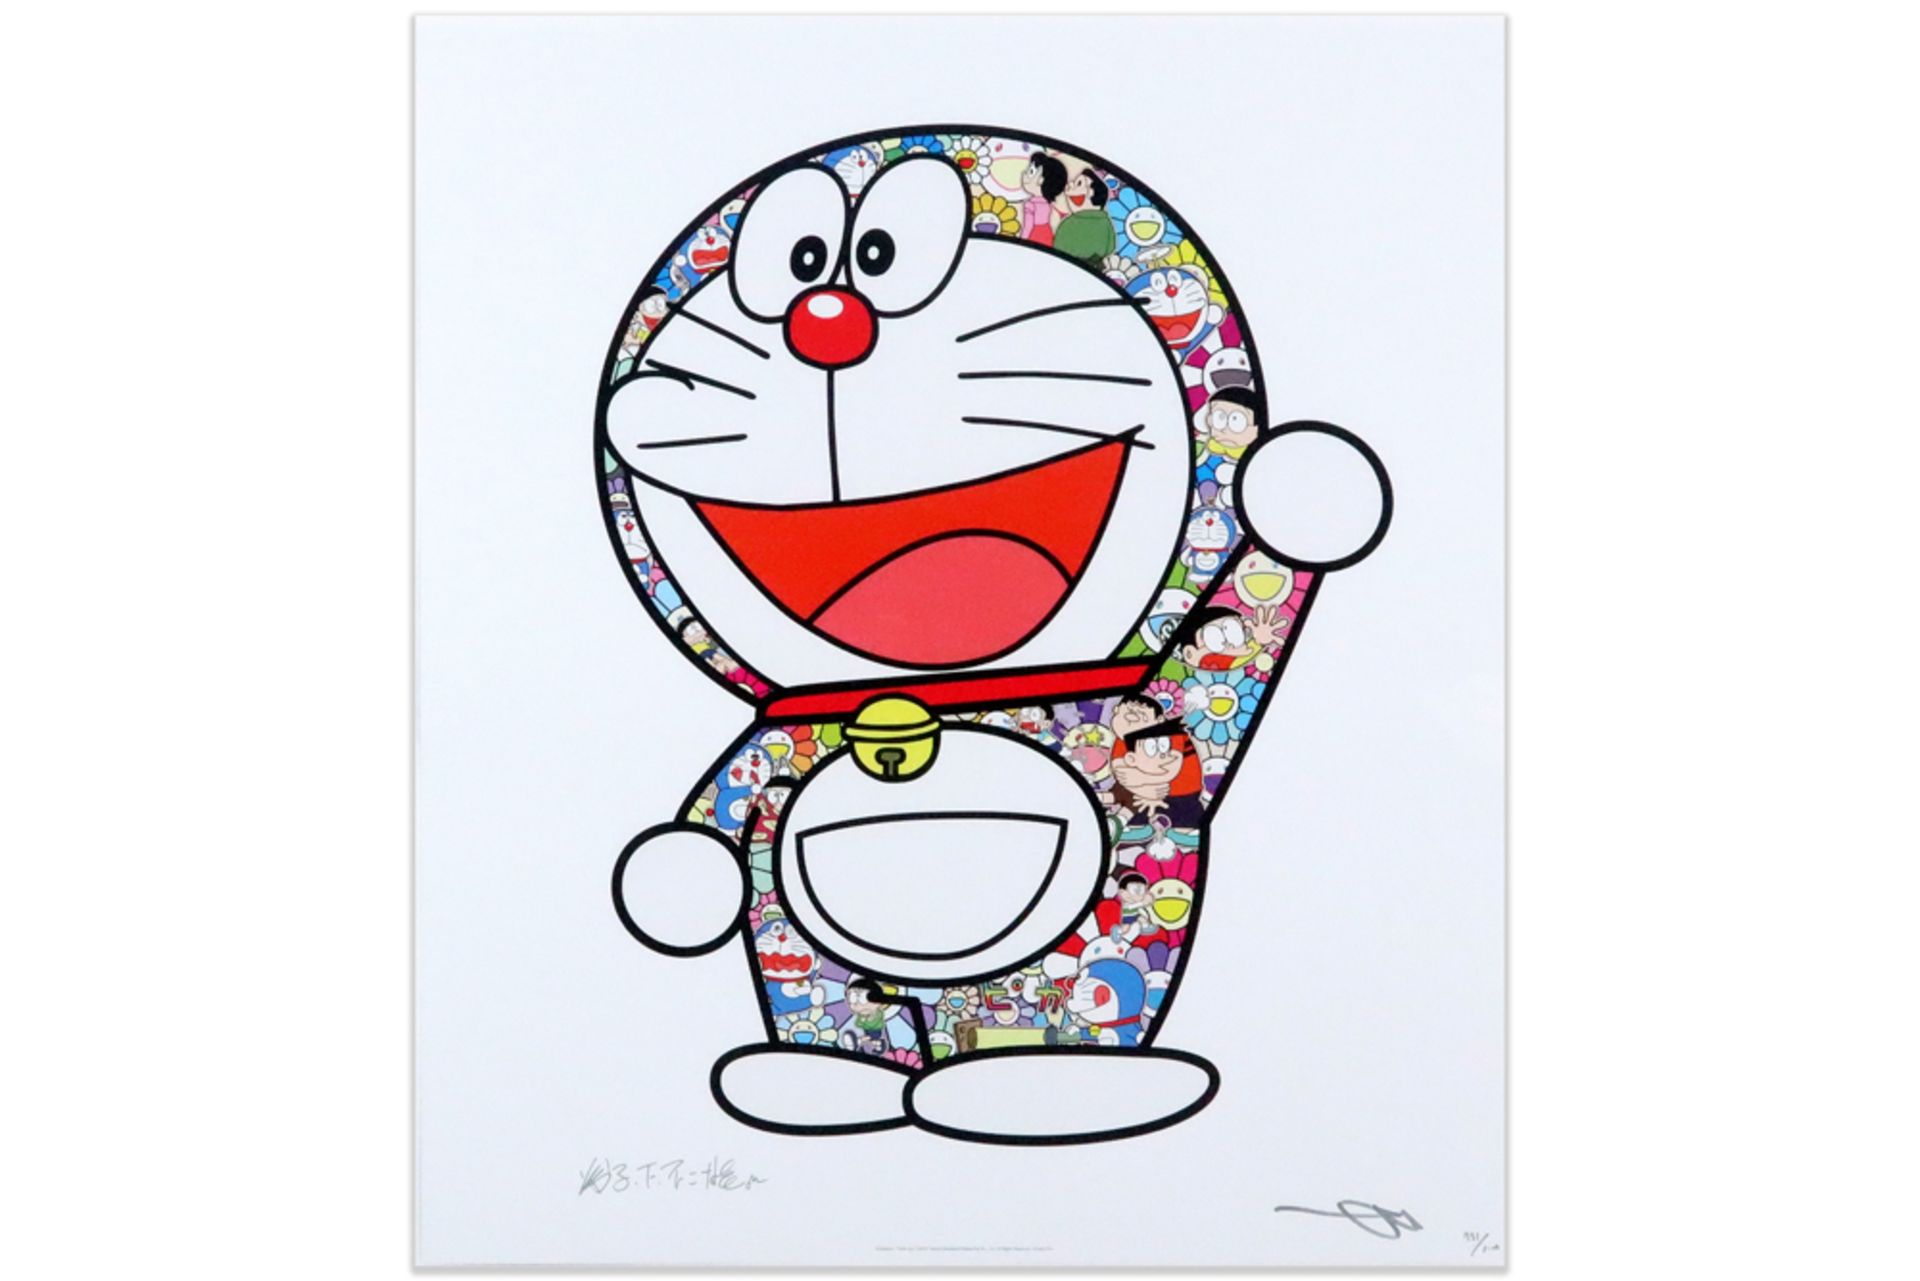 Takashi Murakami "Doraemon: Here we go! " signed offset lithograph printed in colors || MURAKAMI